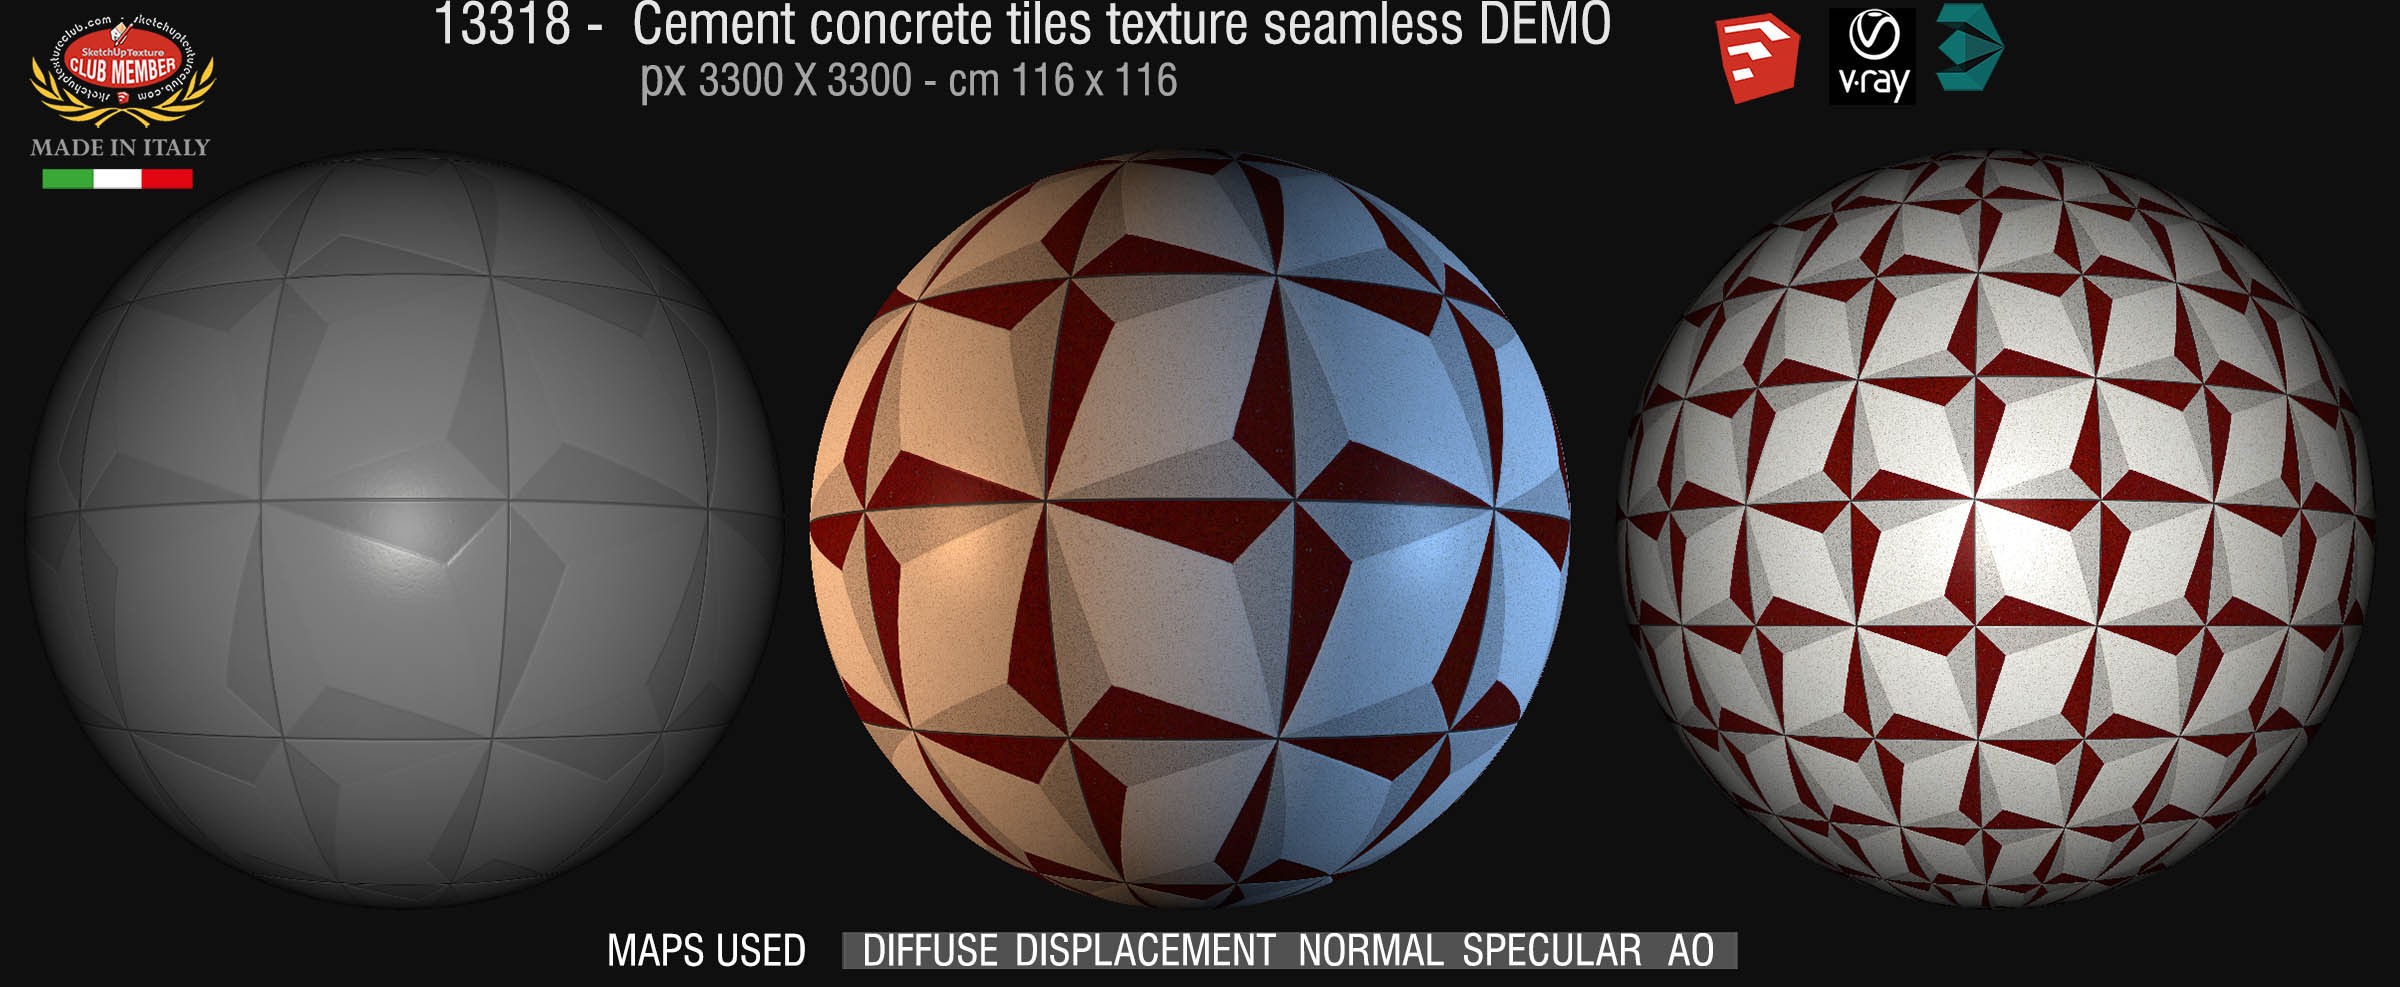 13318 Cement concrete tile texture seamless + maps DEMO